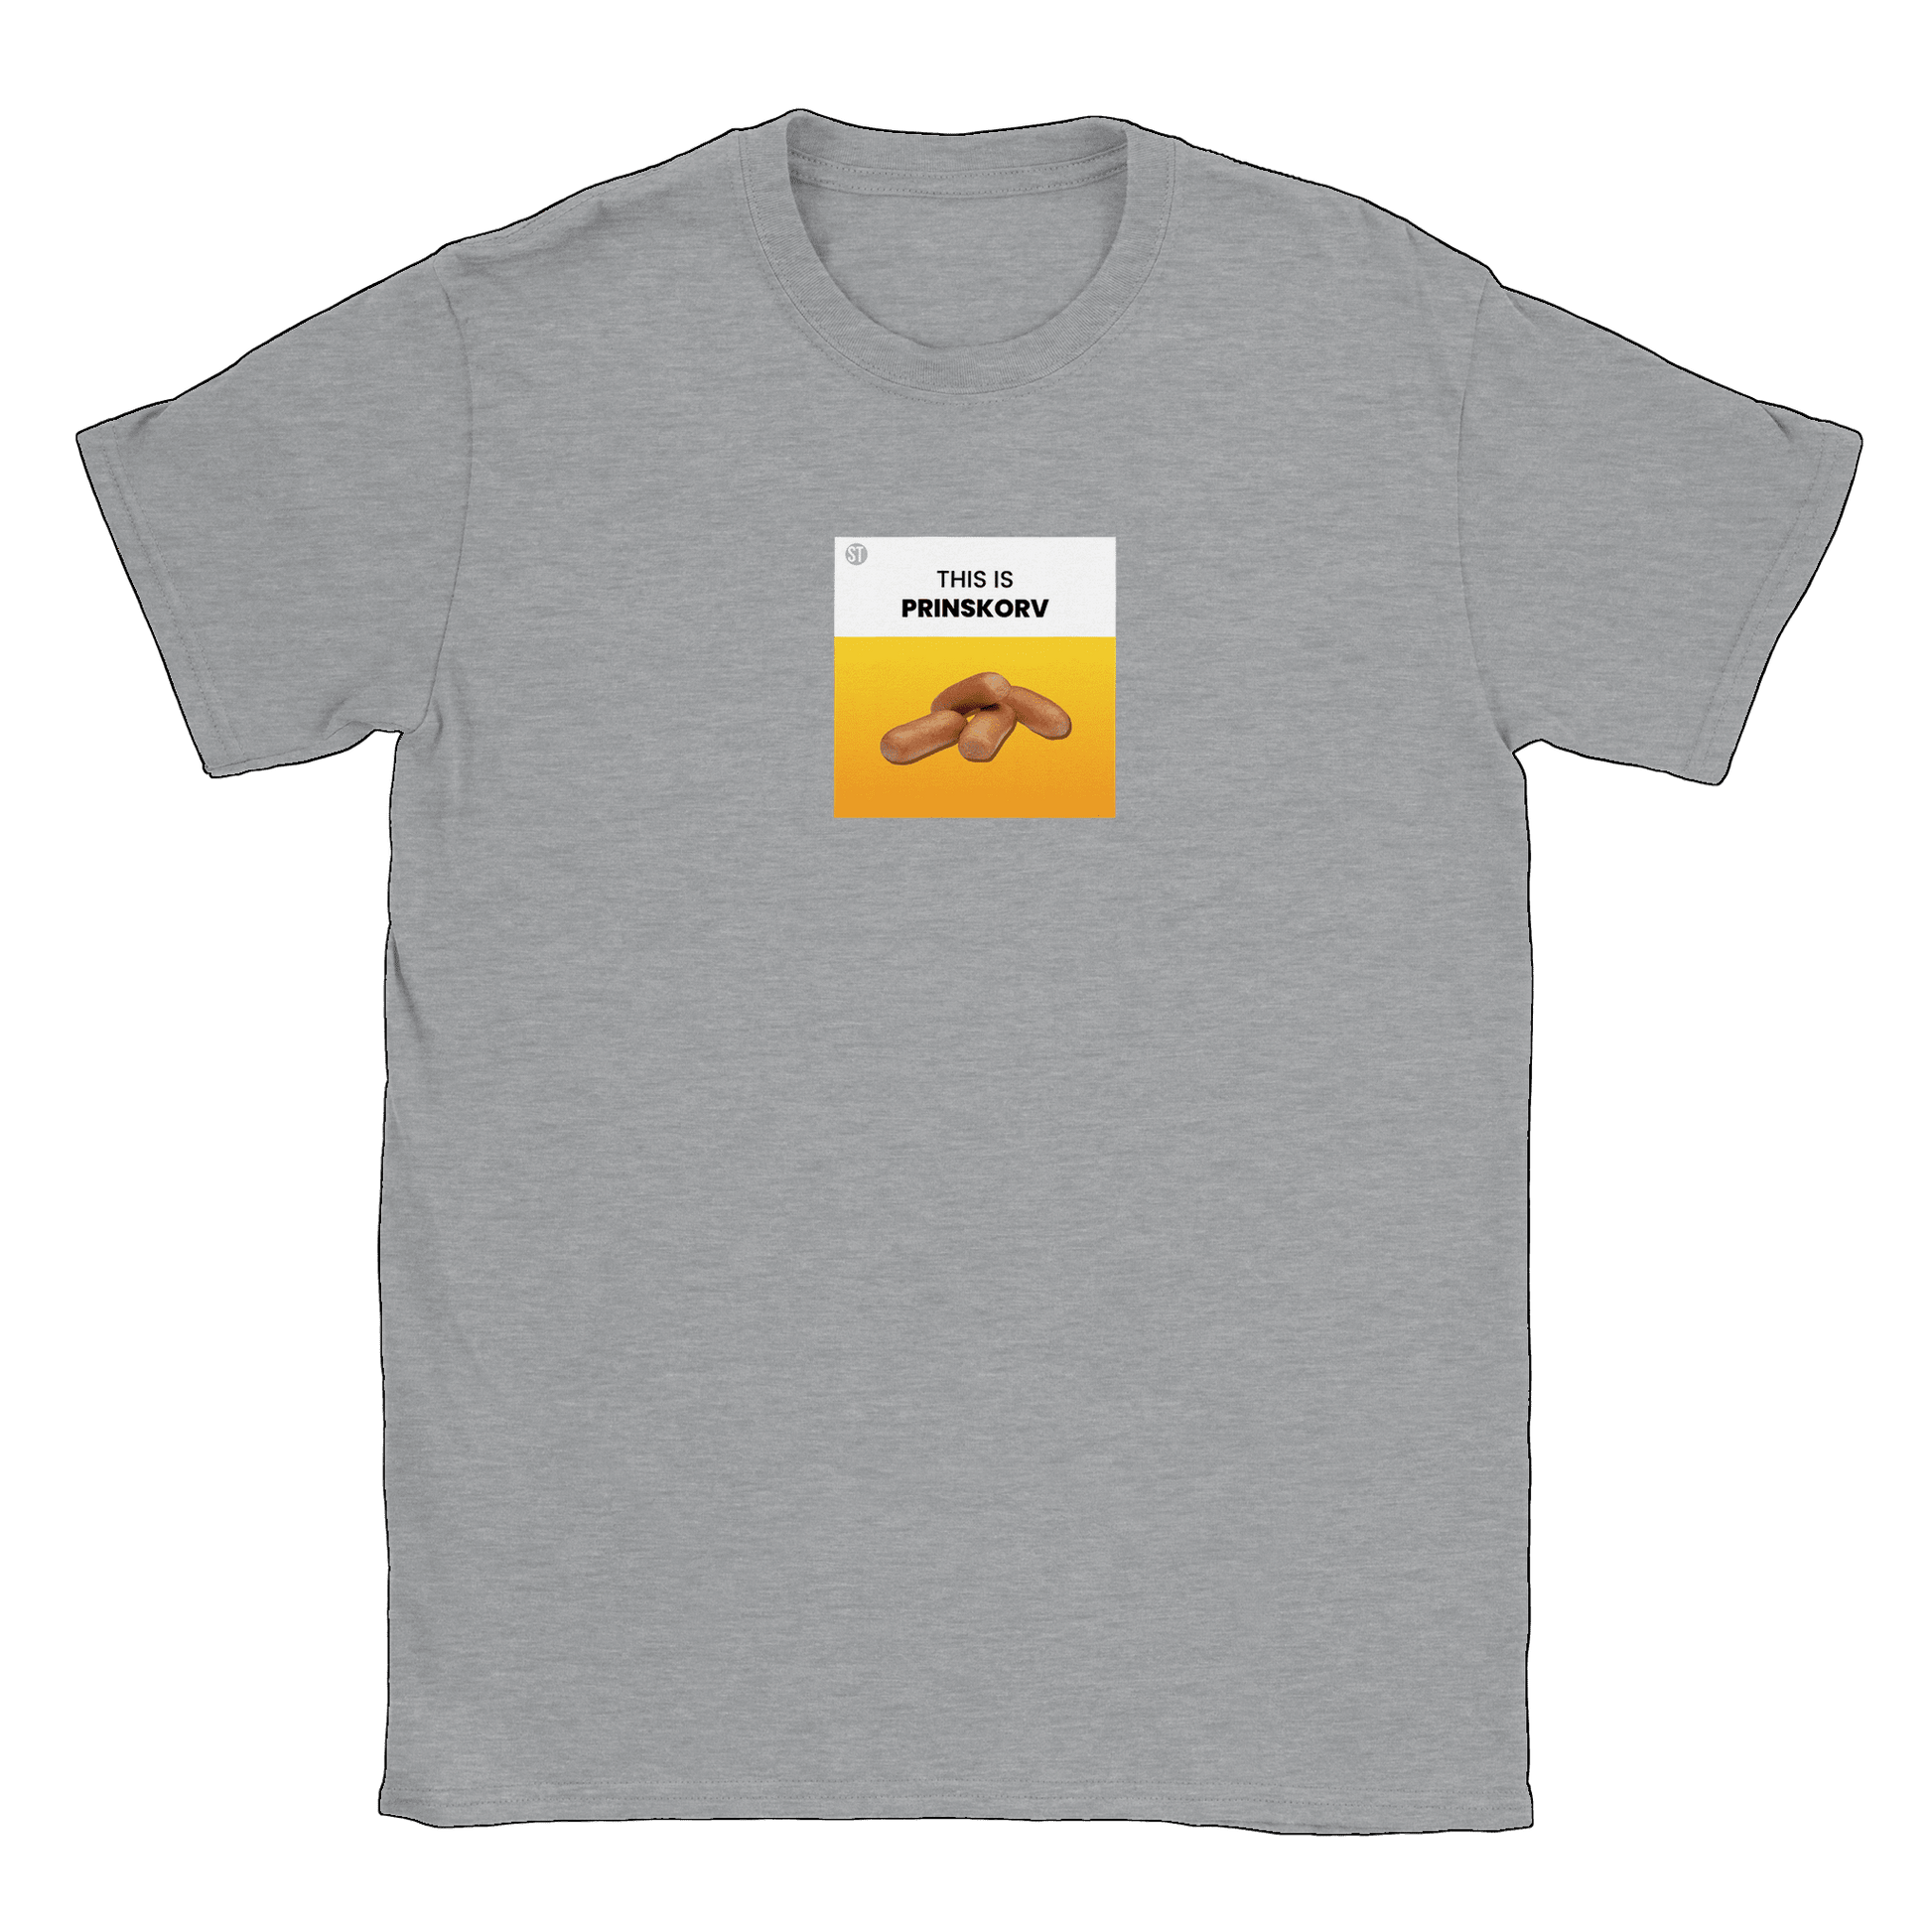 This is Prinskorv - T-shirt Sports Grey